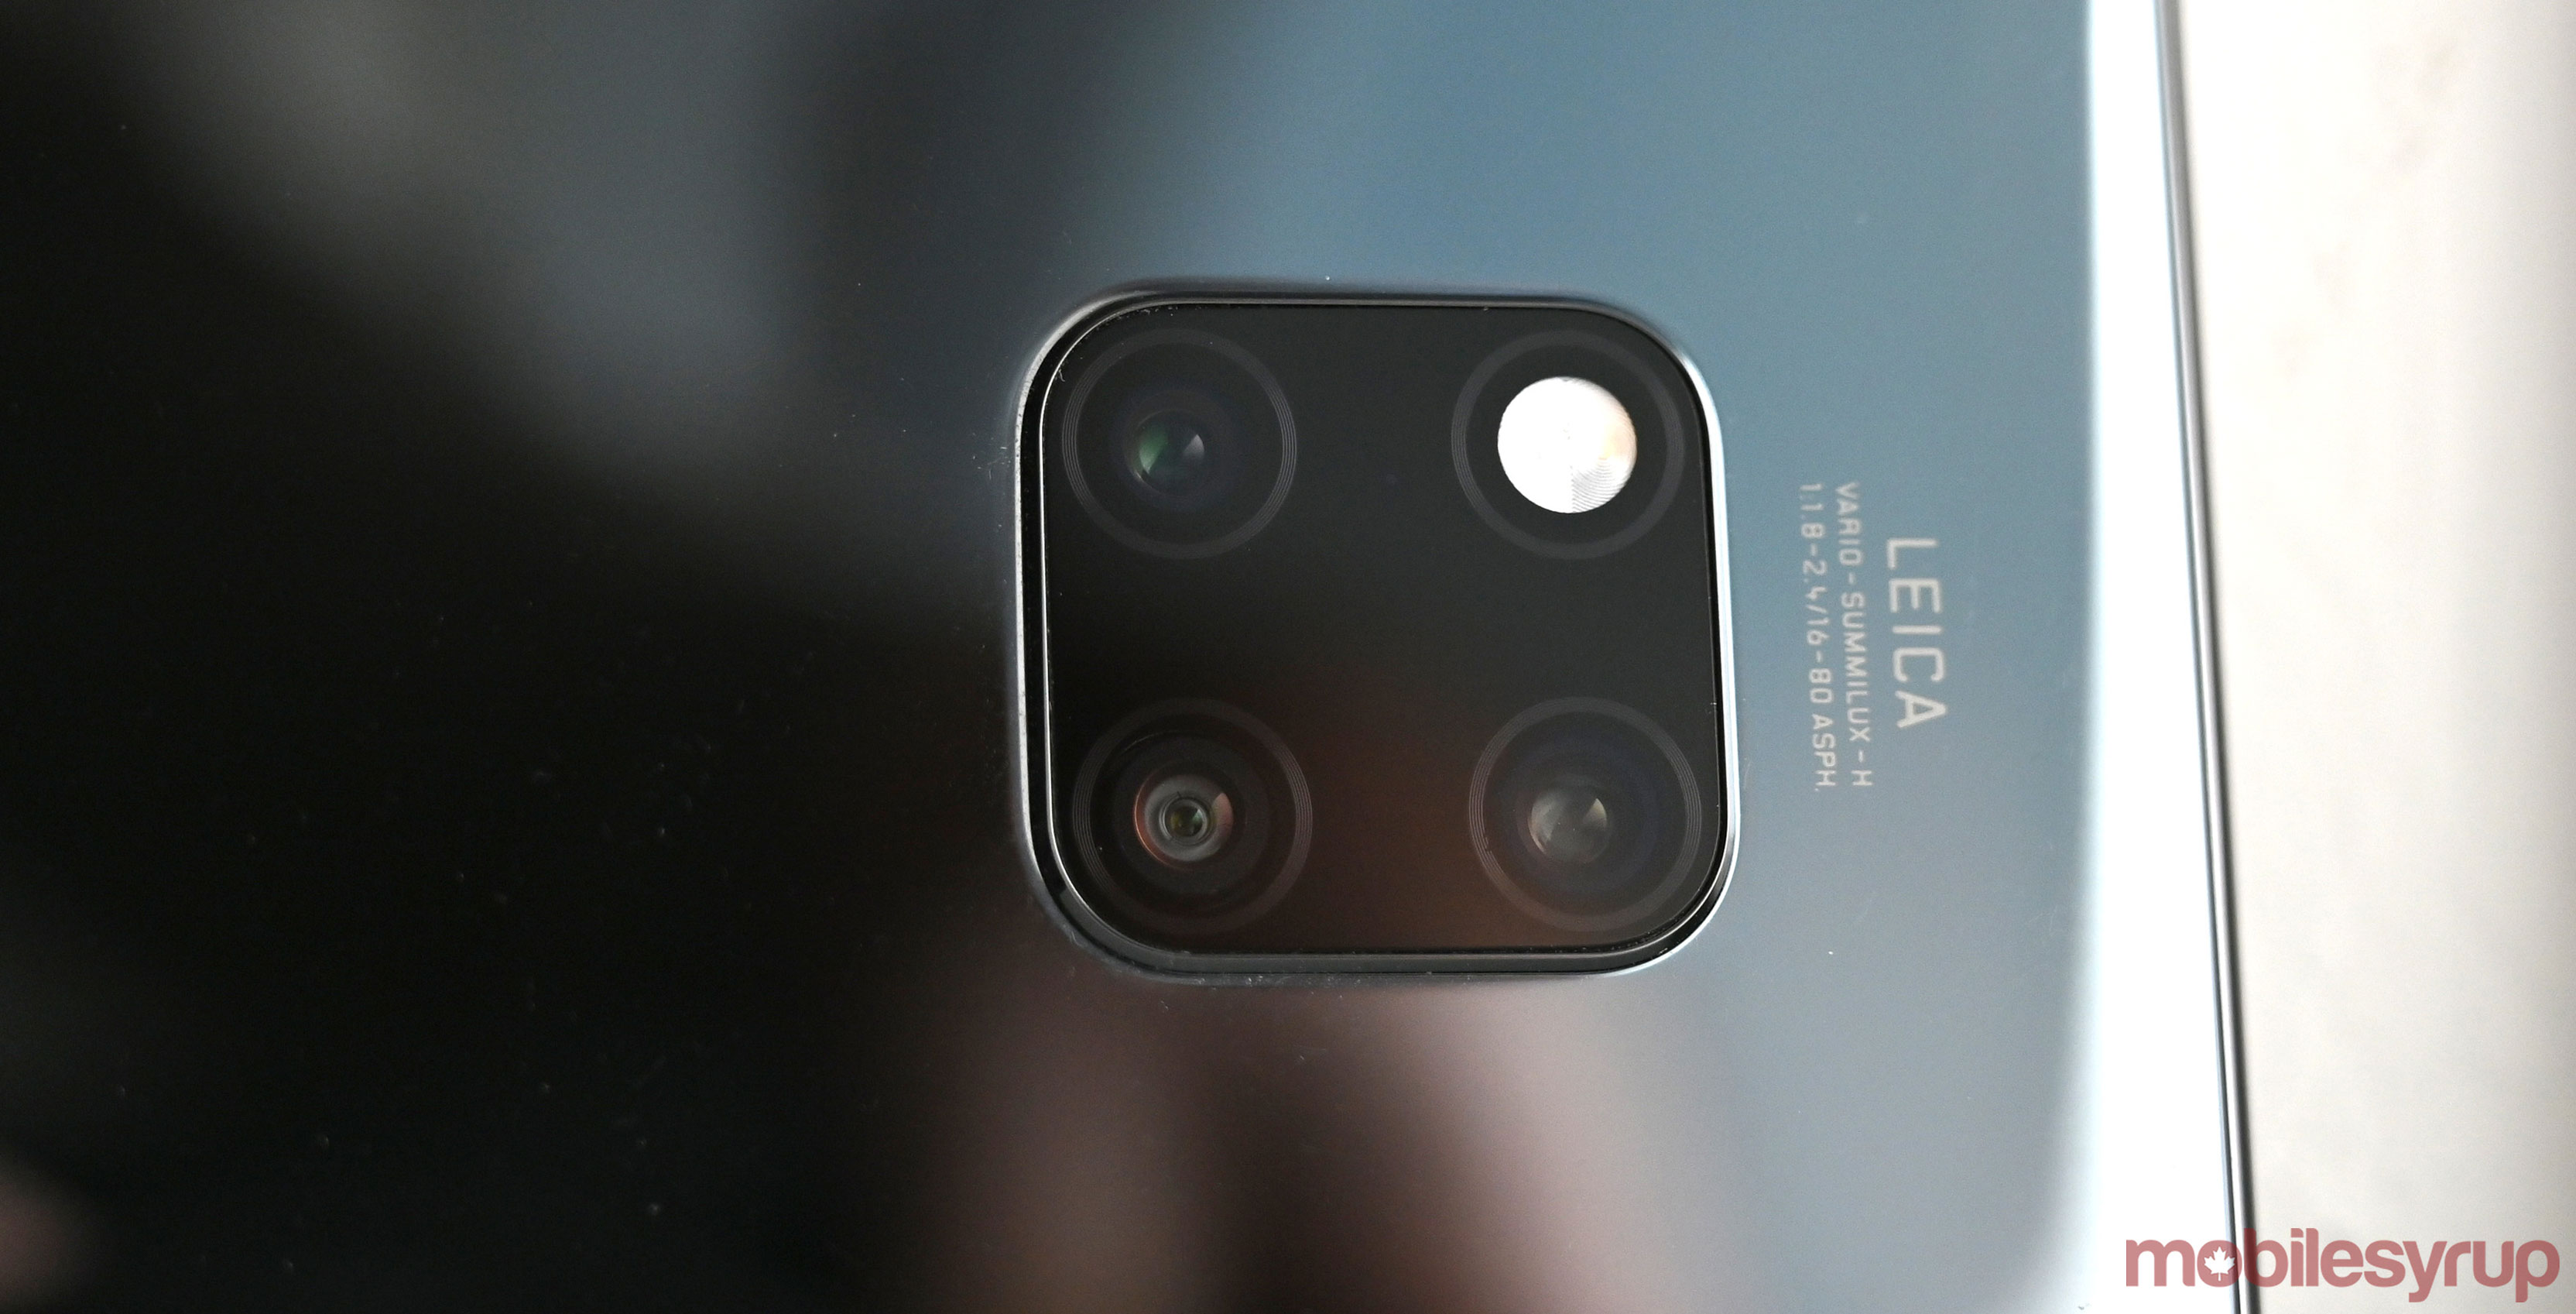 Rustiek Moet Overwinnen Huawei Mate 20 Pro Camera Review: Serving notice to everyone